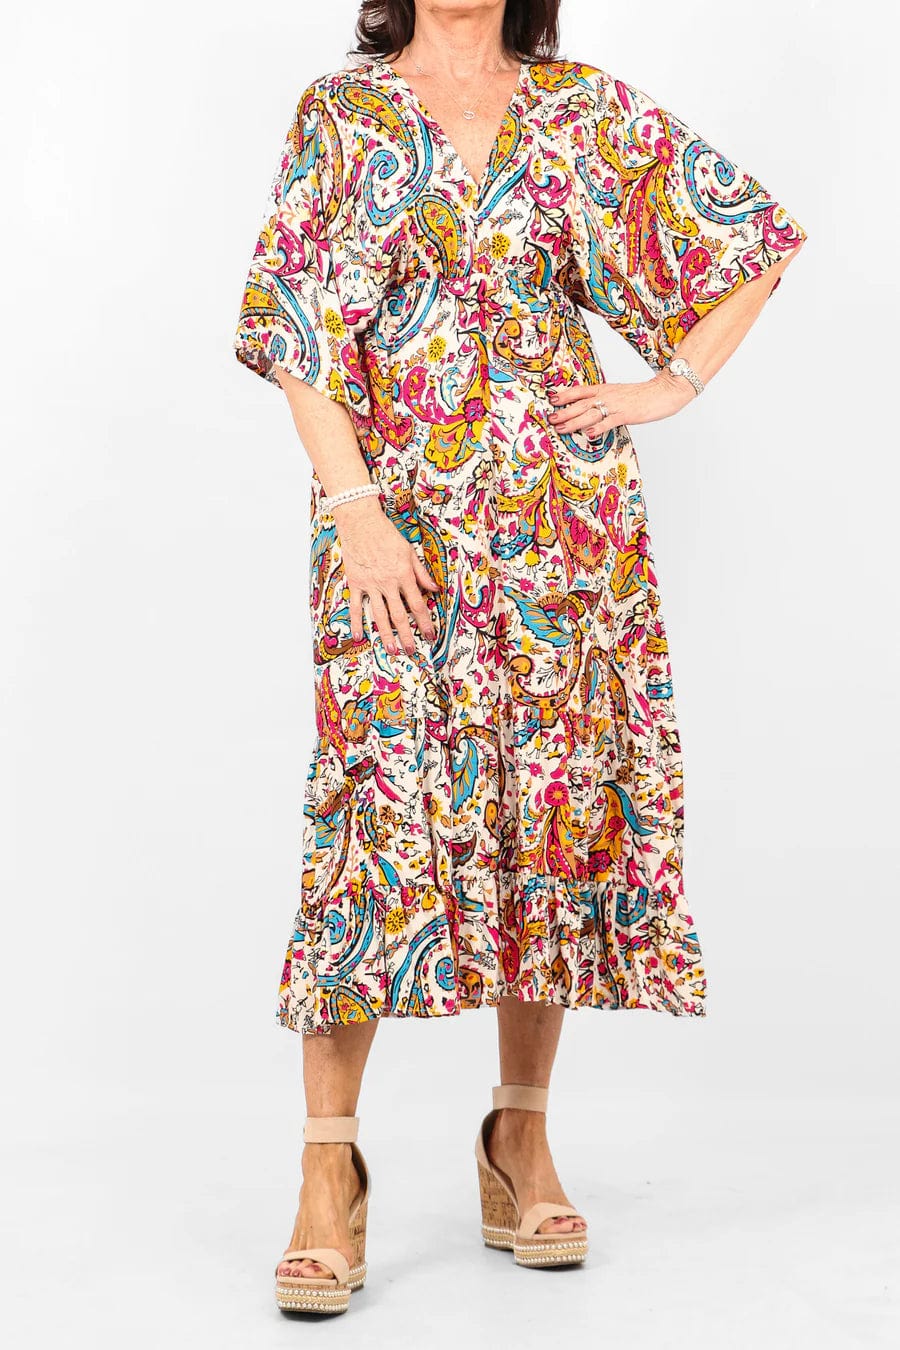 lusciousscarves Clothing Small/Medium Floaty Kaftan Summer Dress Fleur-de-lis Design